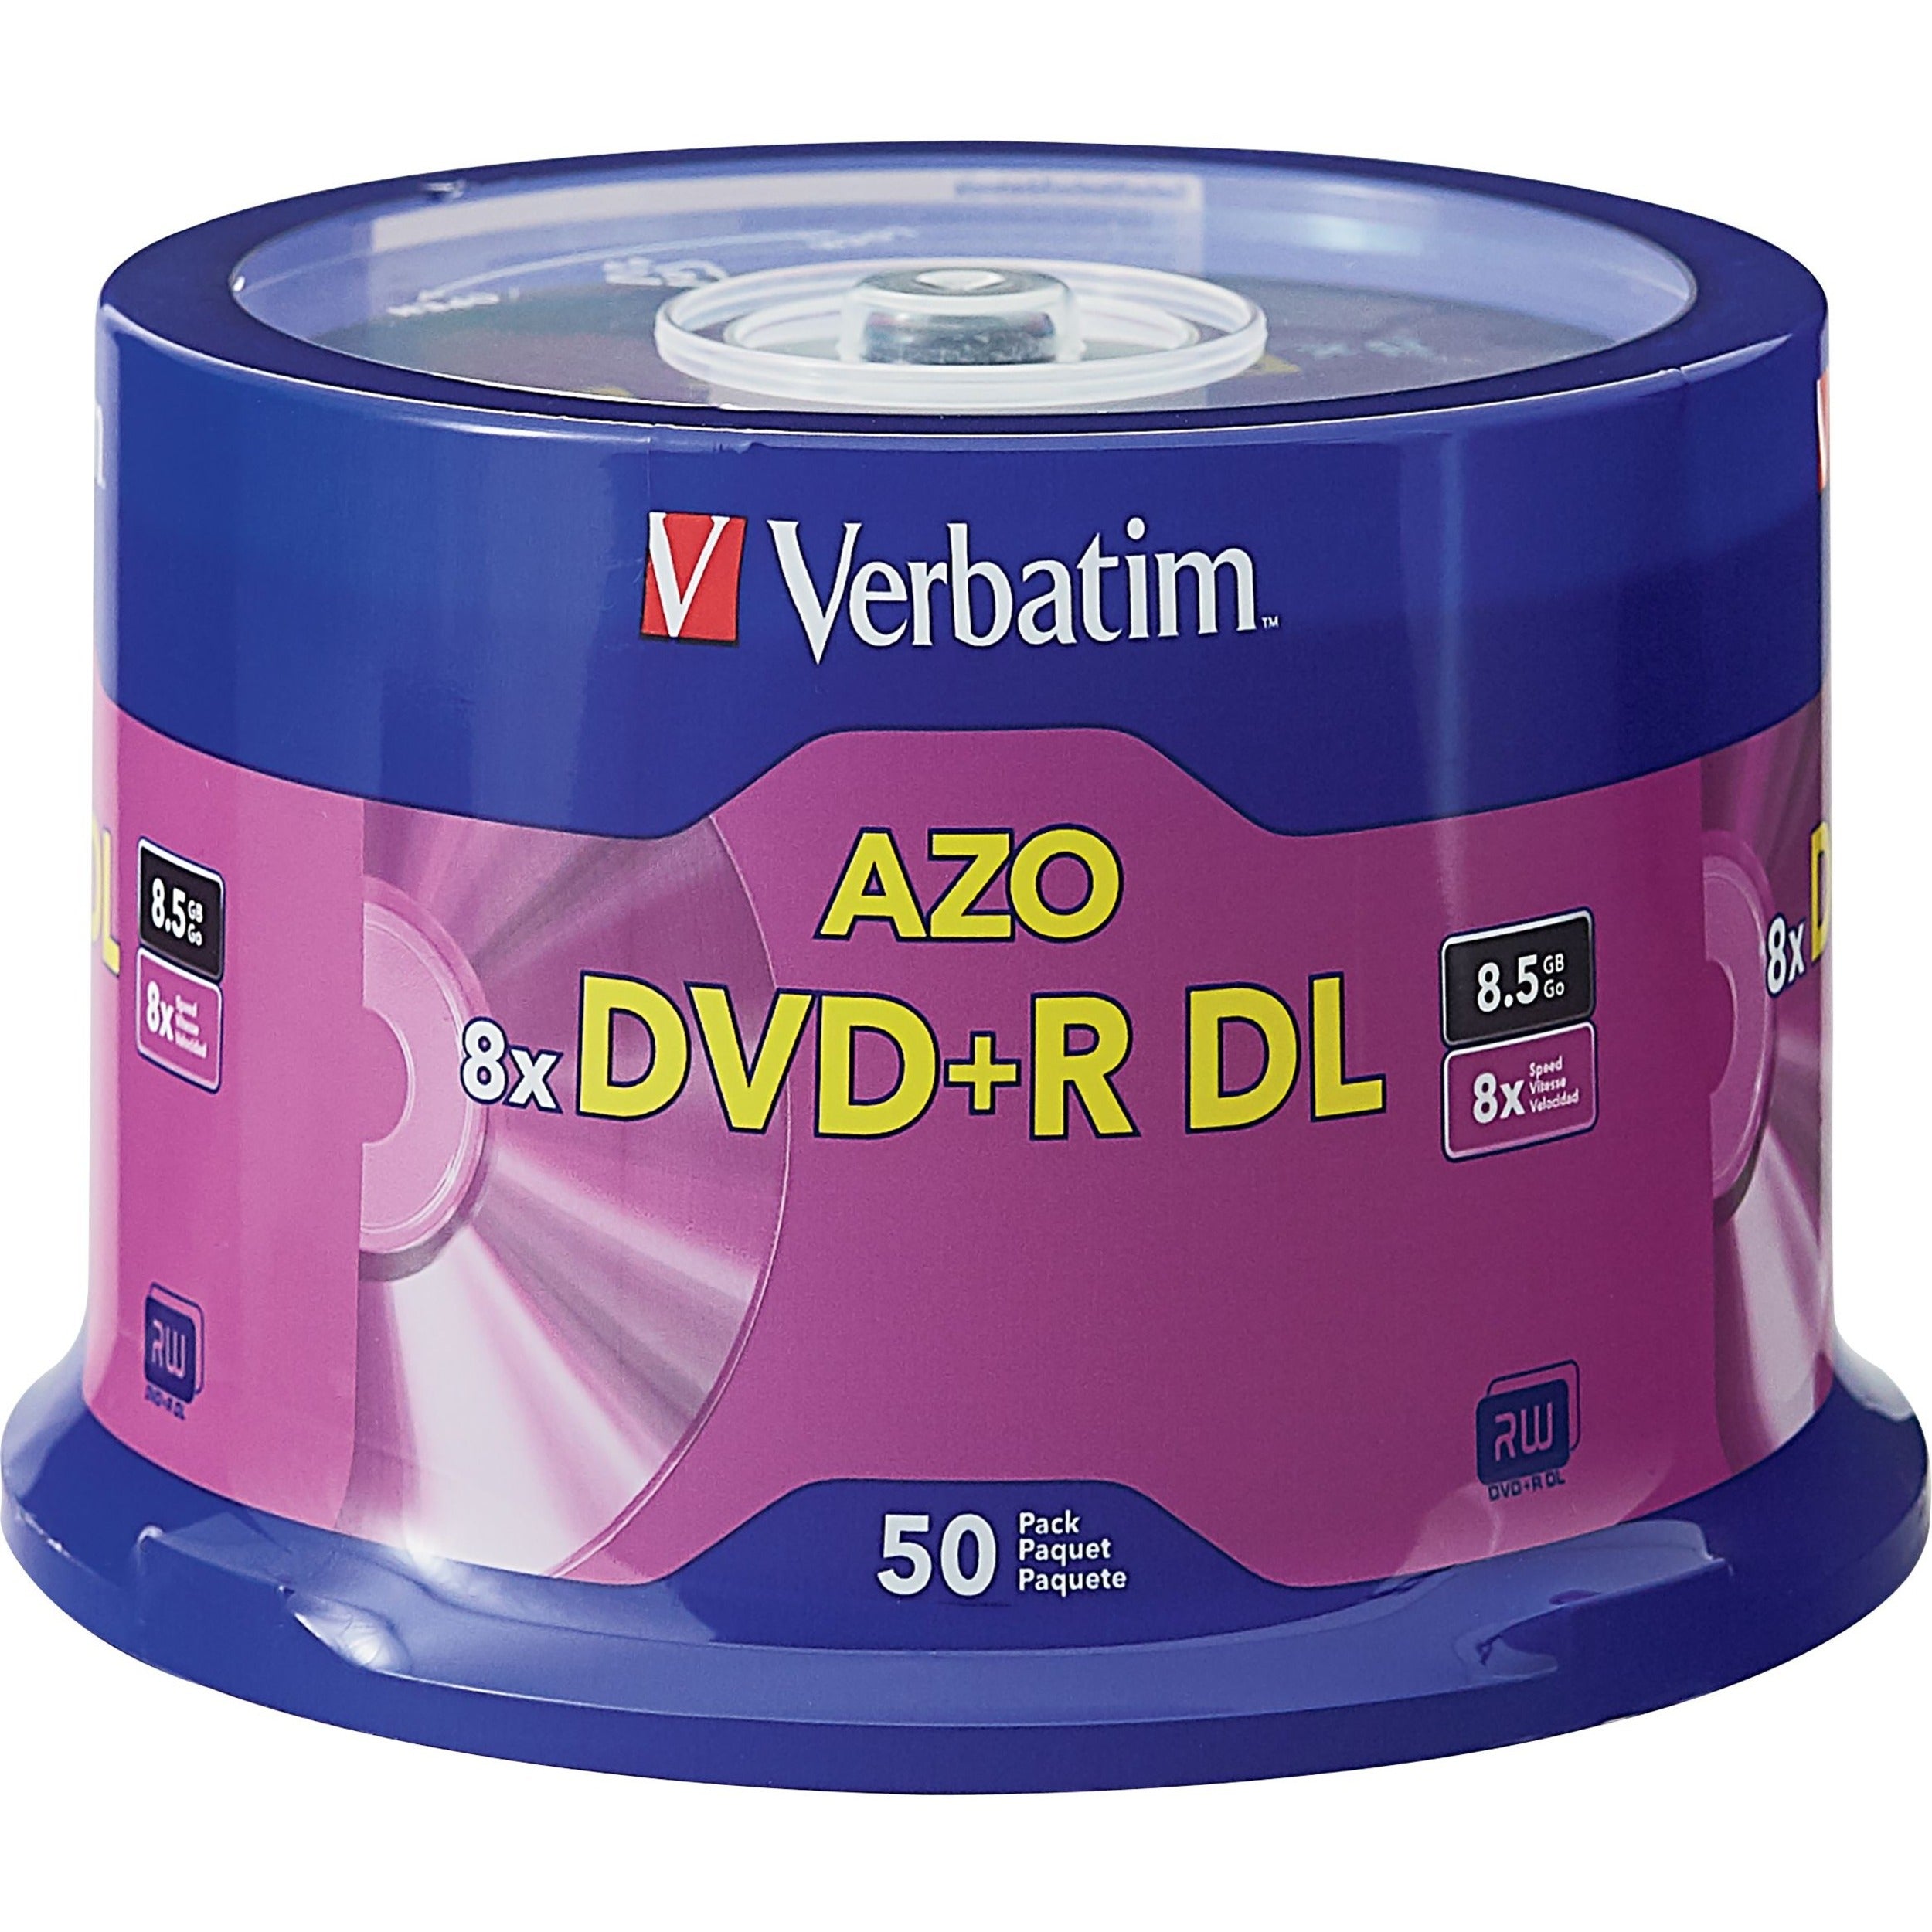 verbatim-dvd-recordable-media-dvd+r-dl-8x-850-gb-50-pack-spindle-120mm-4-hour-maximum-recording-time_ver97000 - 1